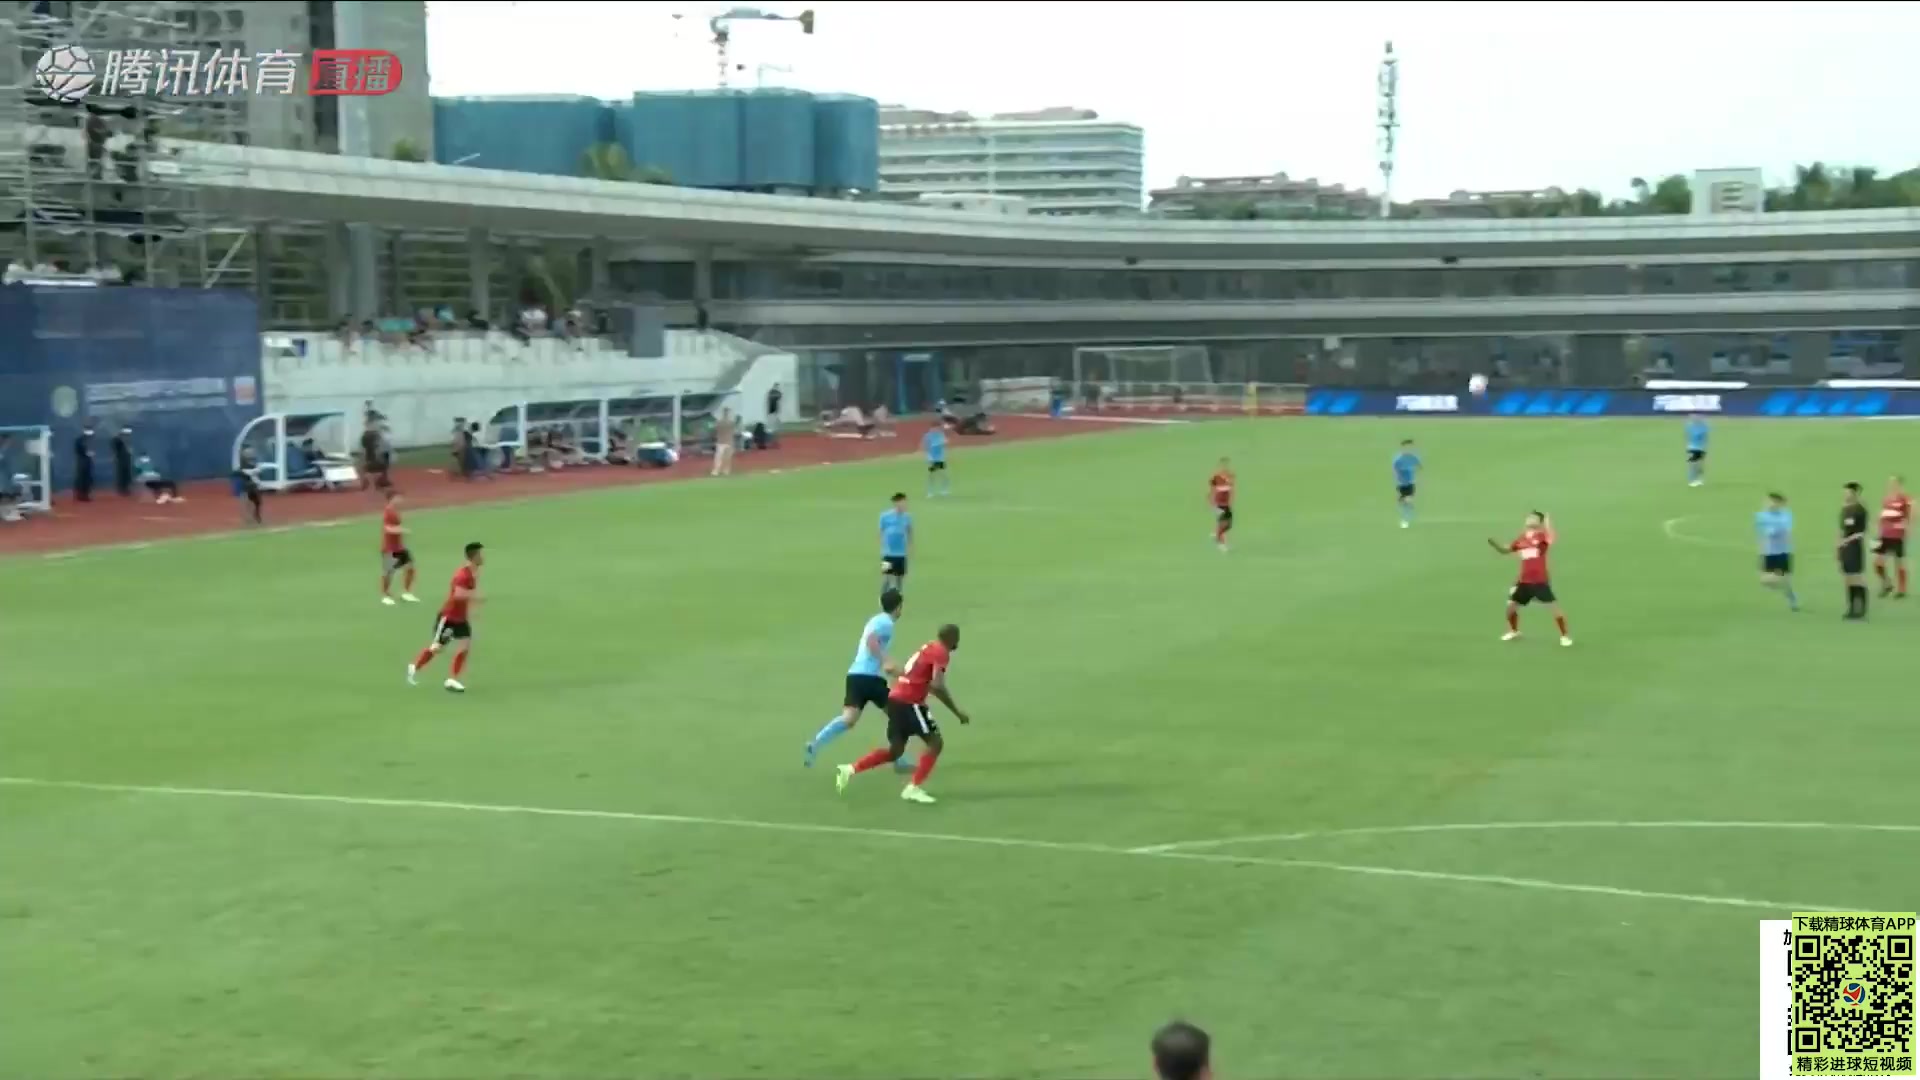 CHA CSL Dalian Pro Vs Changchun Yatai  Goal in 69 min, Score 2:1